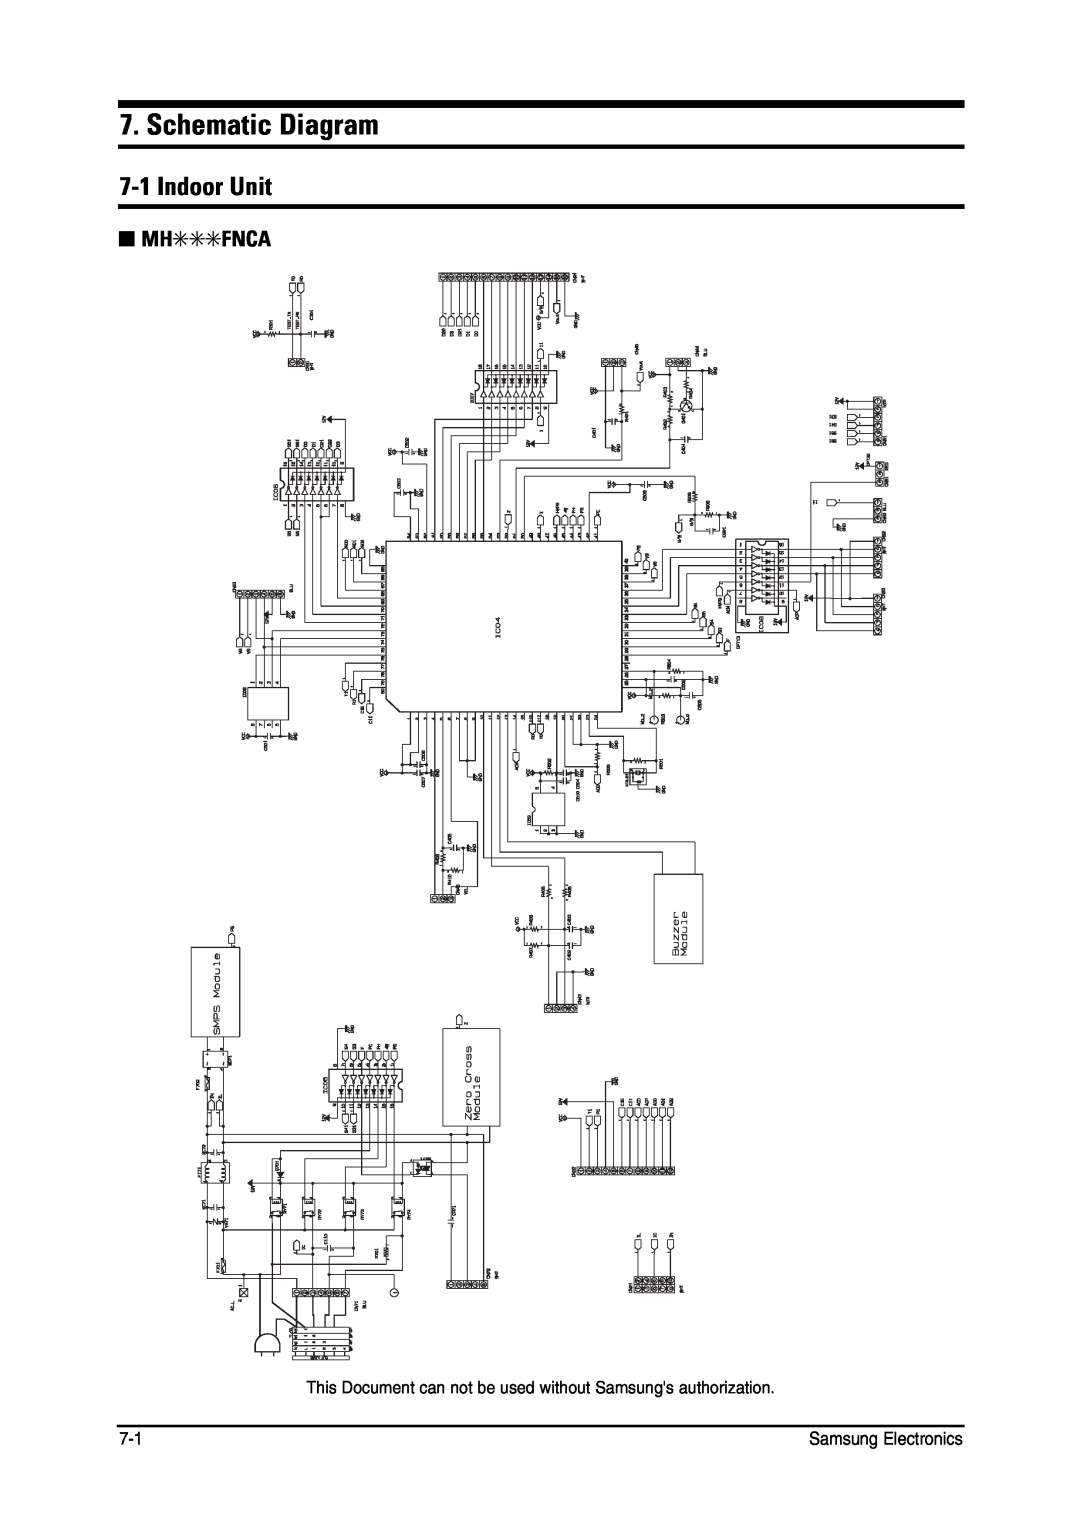 Samsung MH026FNCA service manual Schematic Diagram, 7-1Indoor Unit, Mhfnca 